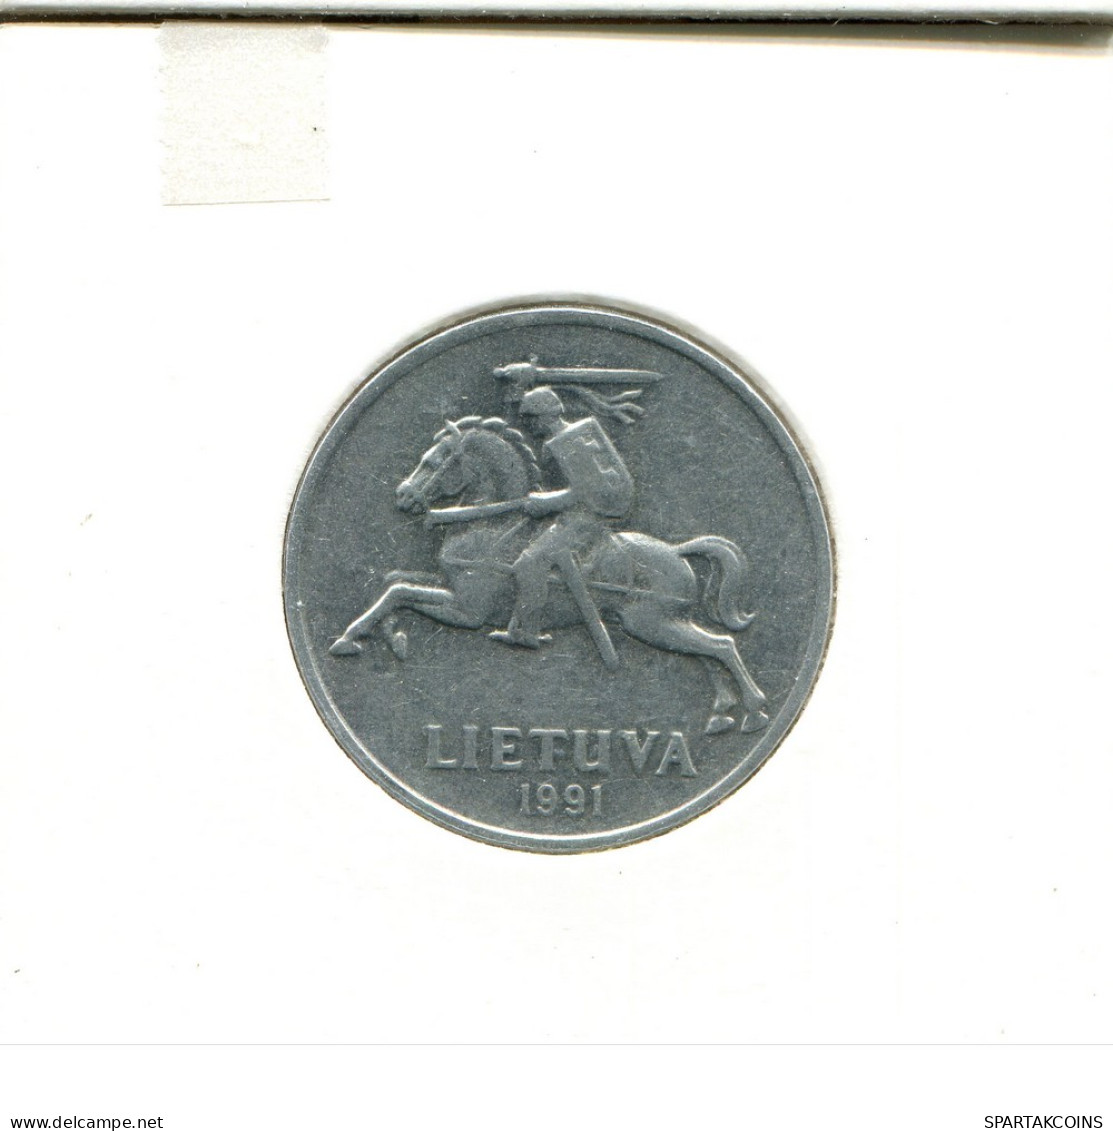 5 CENTAI 1991 LITHUANIA Coin #AS695.U - Lituanie